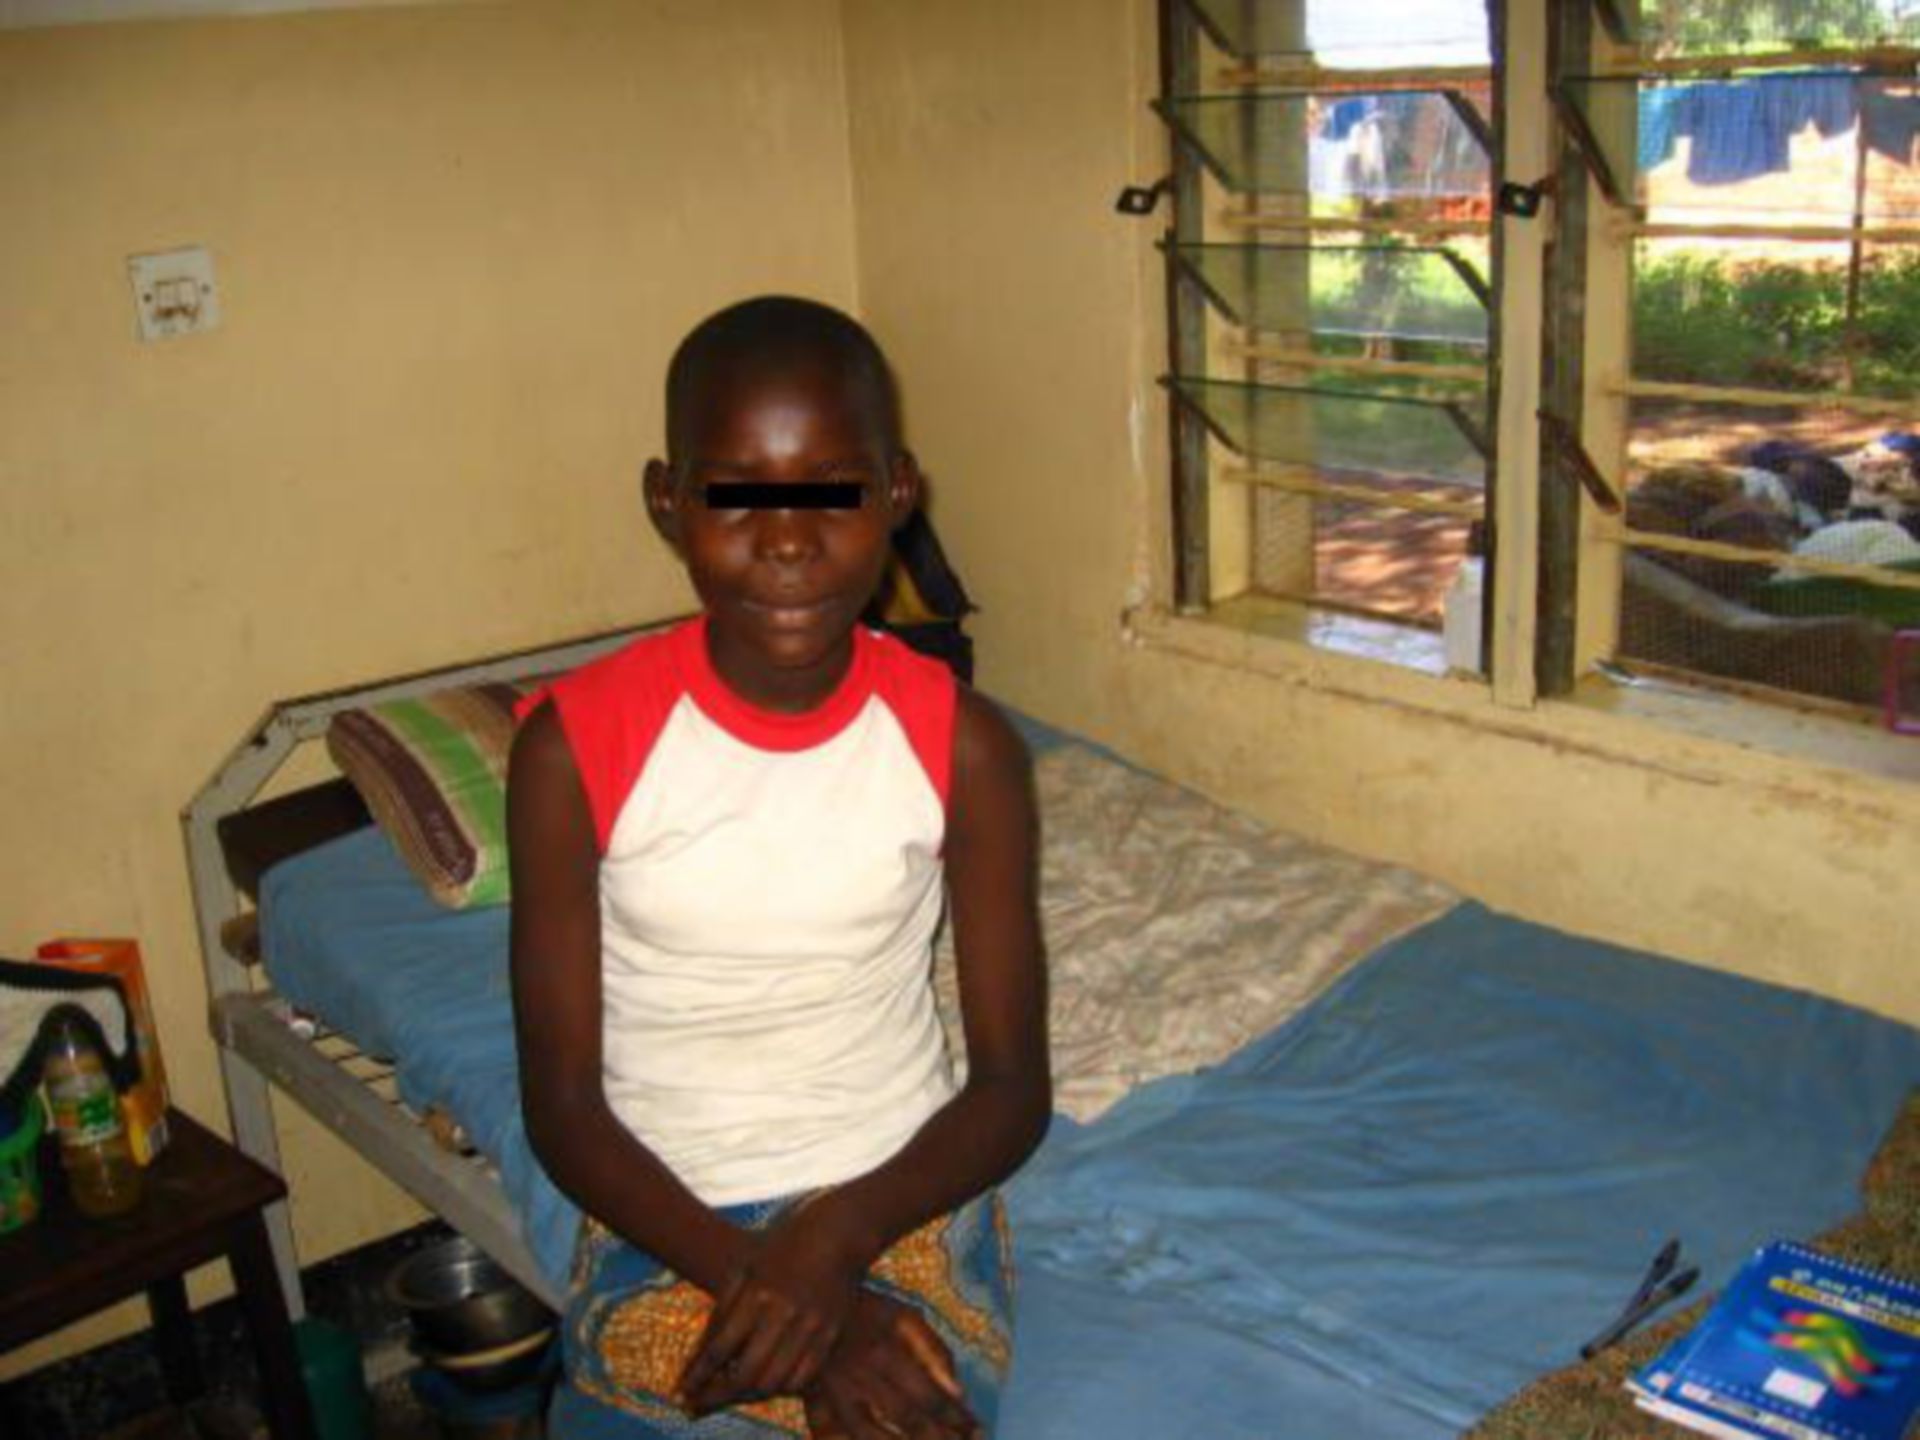 Patient from Uganda